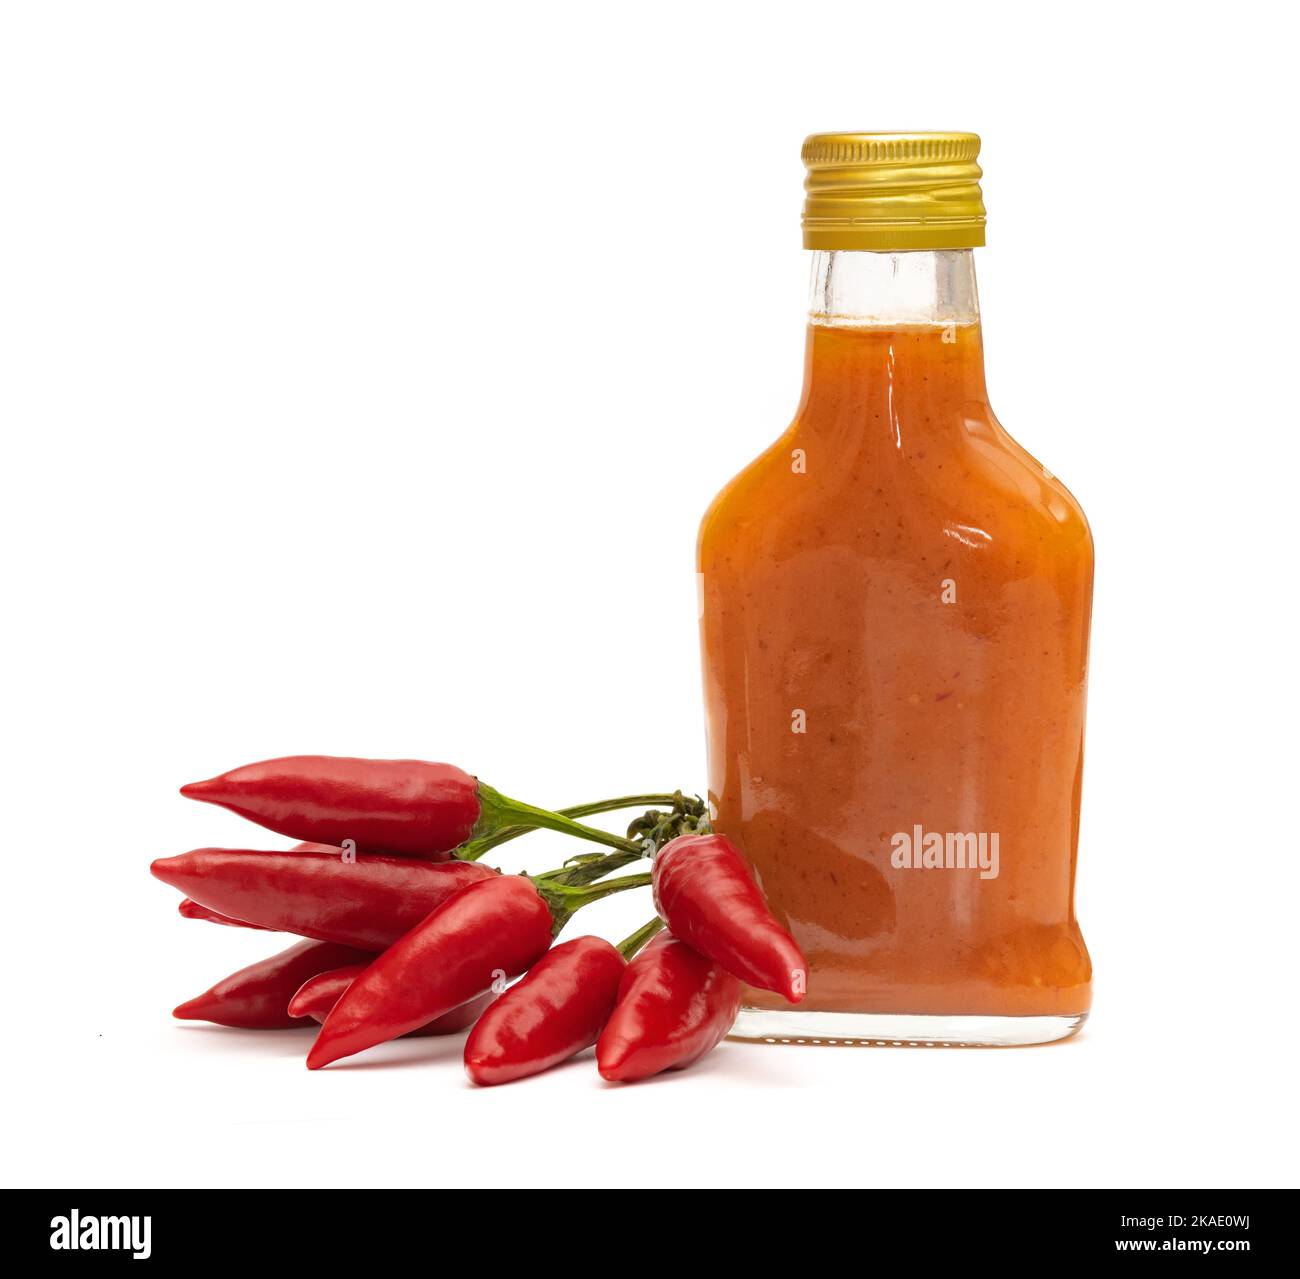 https://c8.alamy.com/comp/2KAE0WJ/bottle-with-homemade-hot-chili-pepper-sauce-and-fresh-tabasco-peppers-on-white-background-2KAE0WJ.jpg